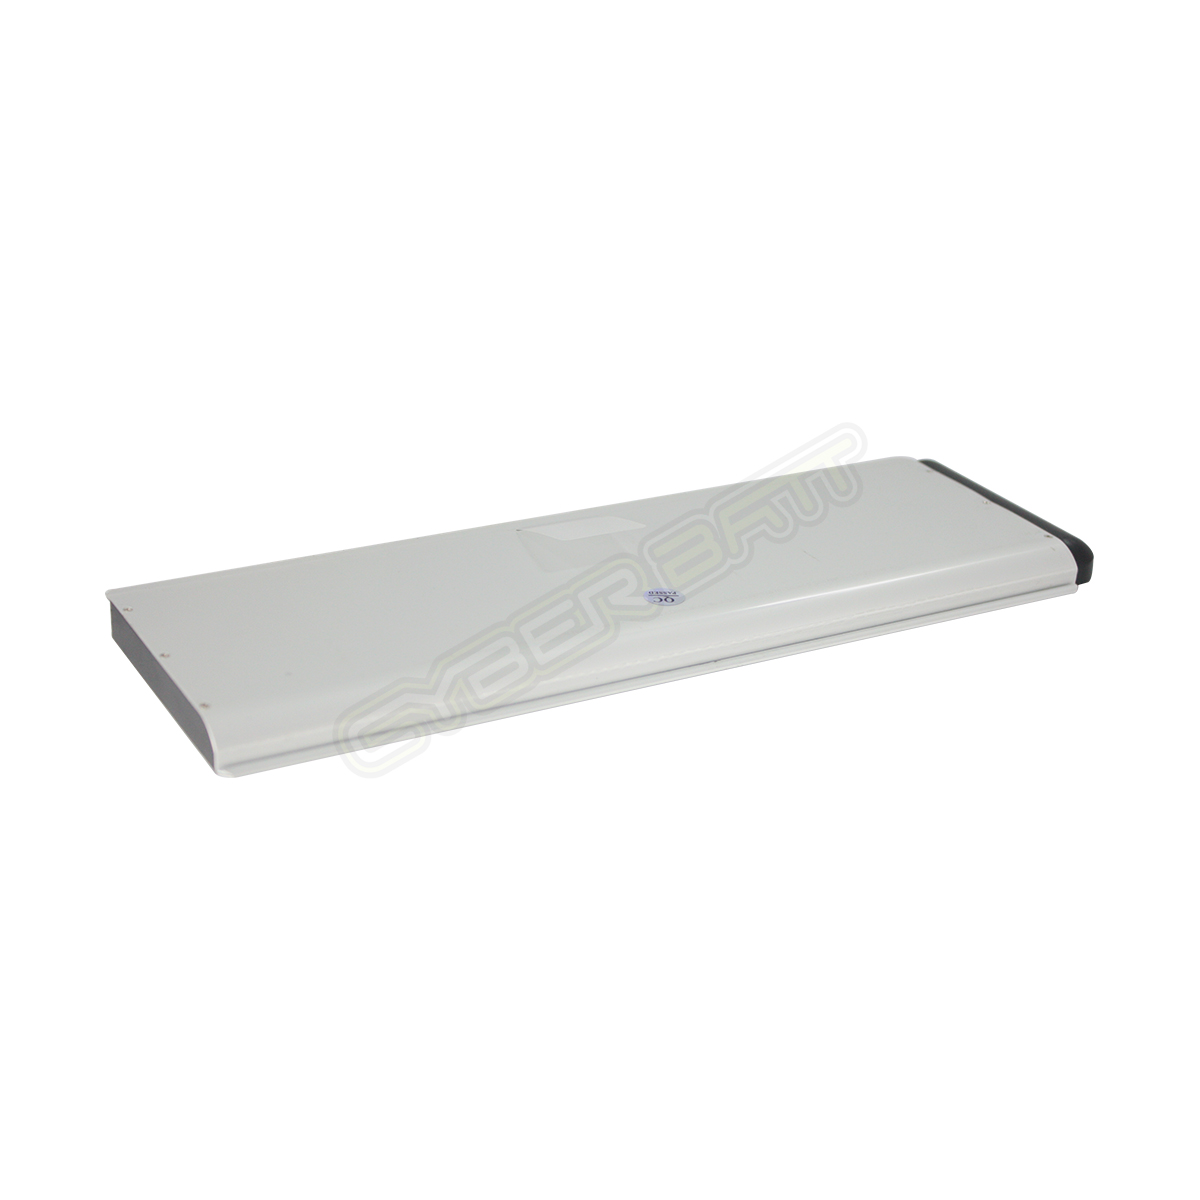 Battery MacBook A1281 For MacBook Pro 15 inch A1286 Silver 10.8V/45Wh (CYBERBATT)